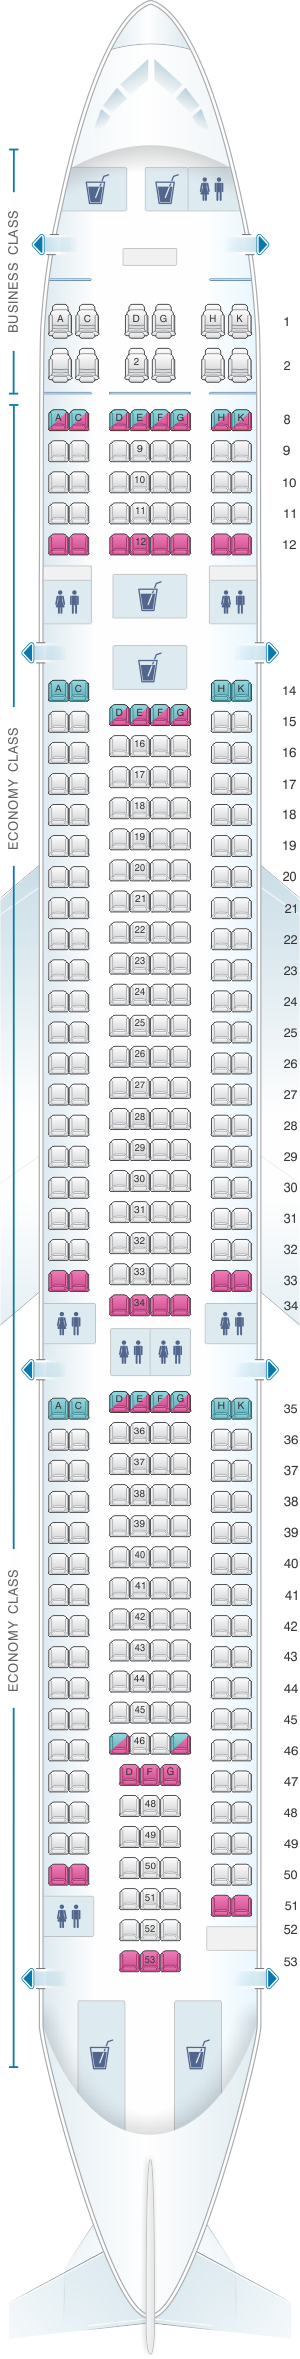 Qantas A330 300 Seat Map